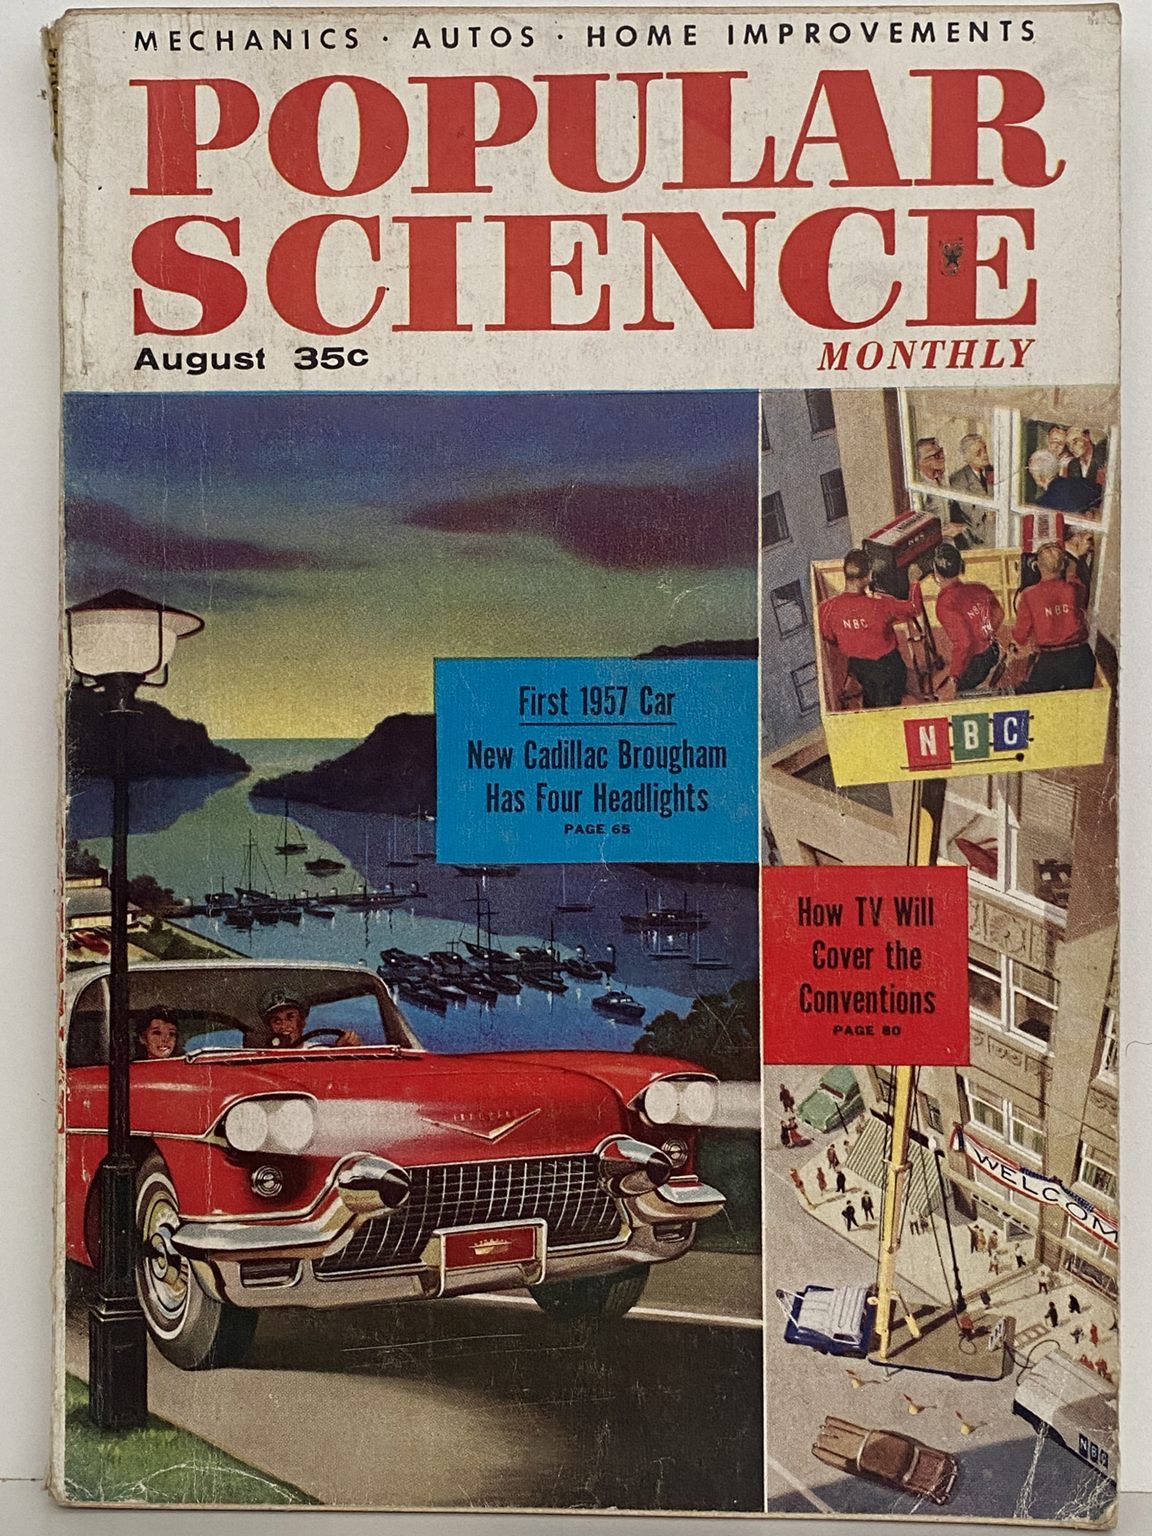 VINTAGE MAGAZINE: Popular Science - August 1956